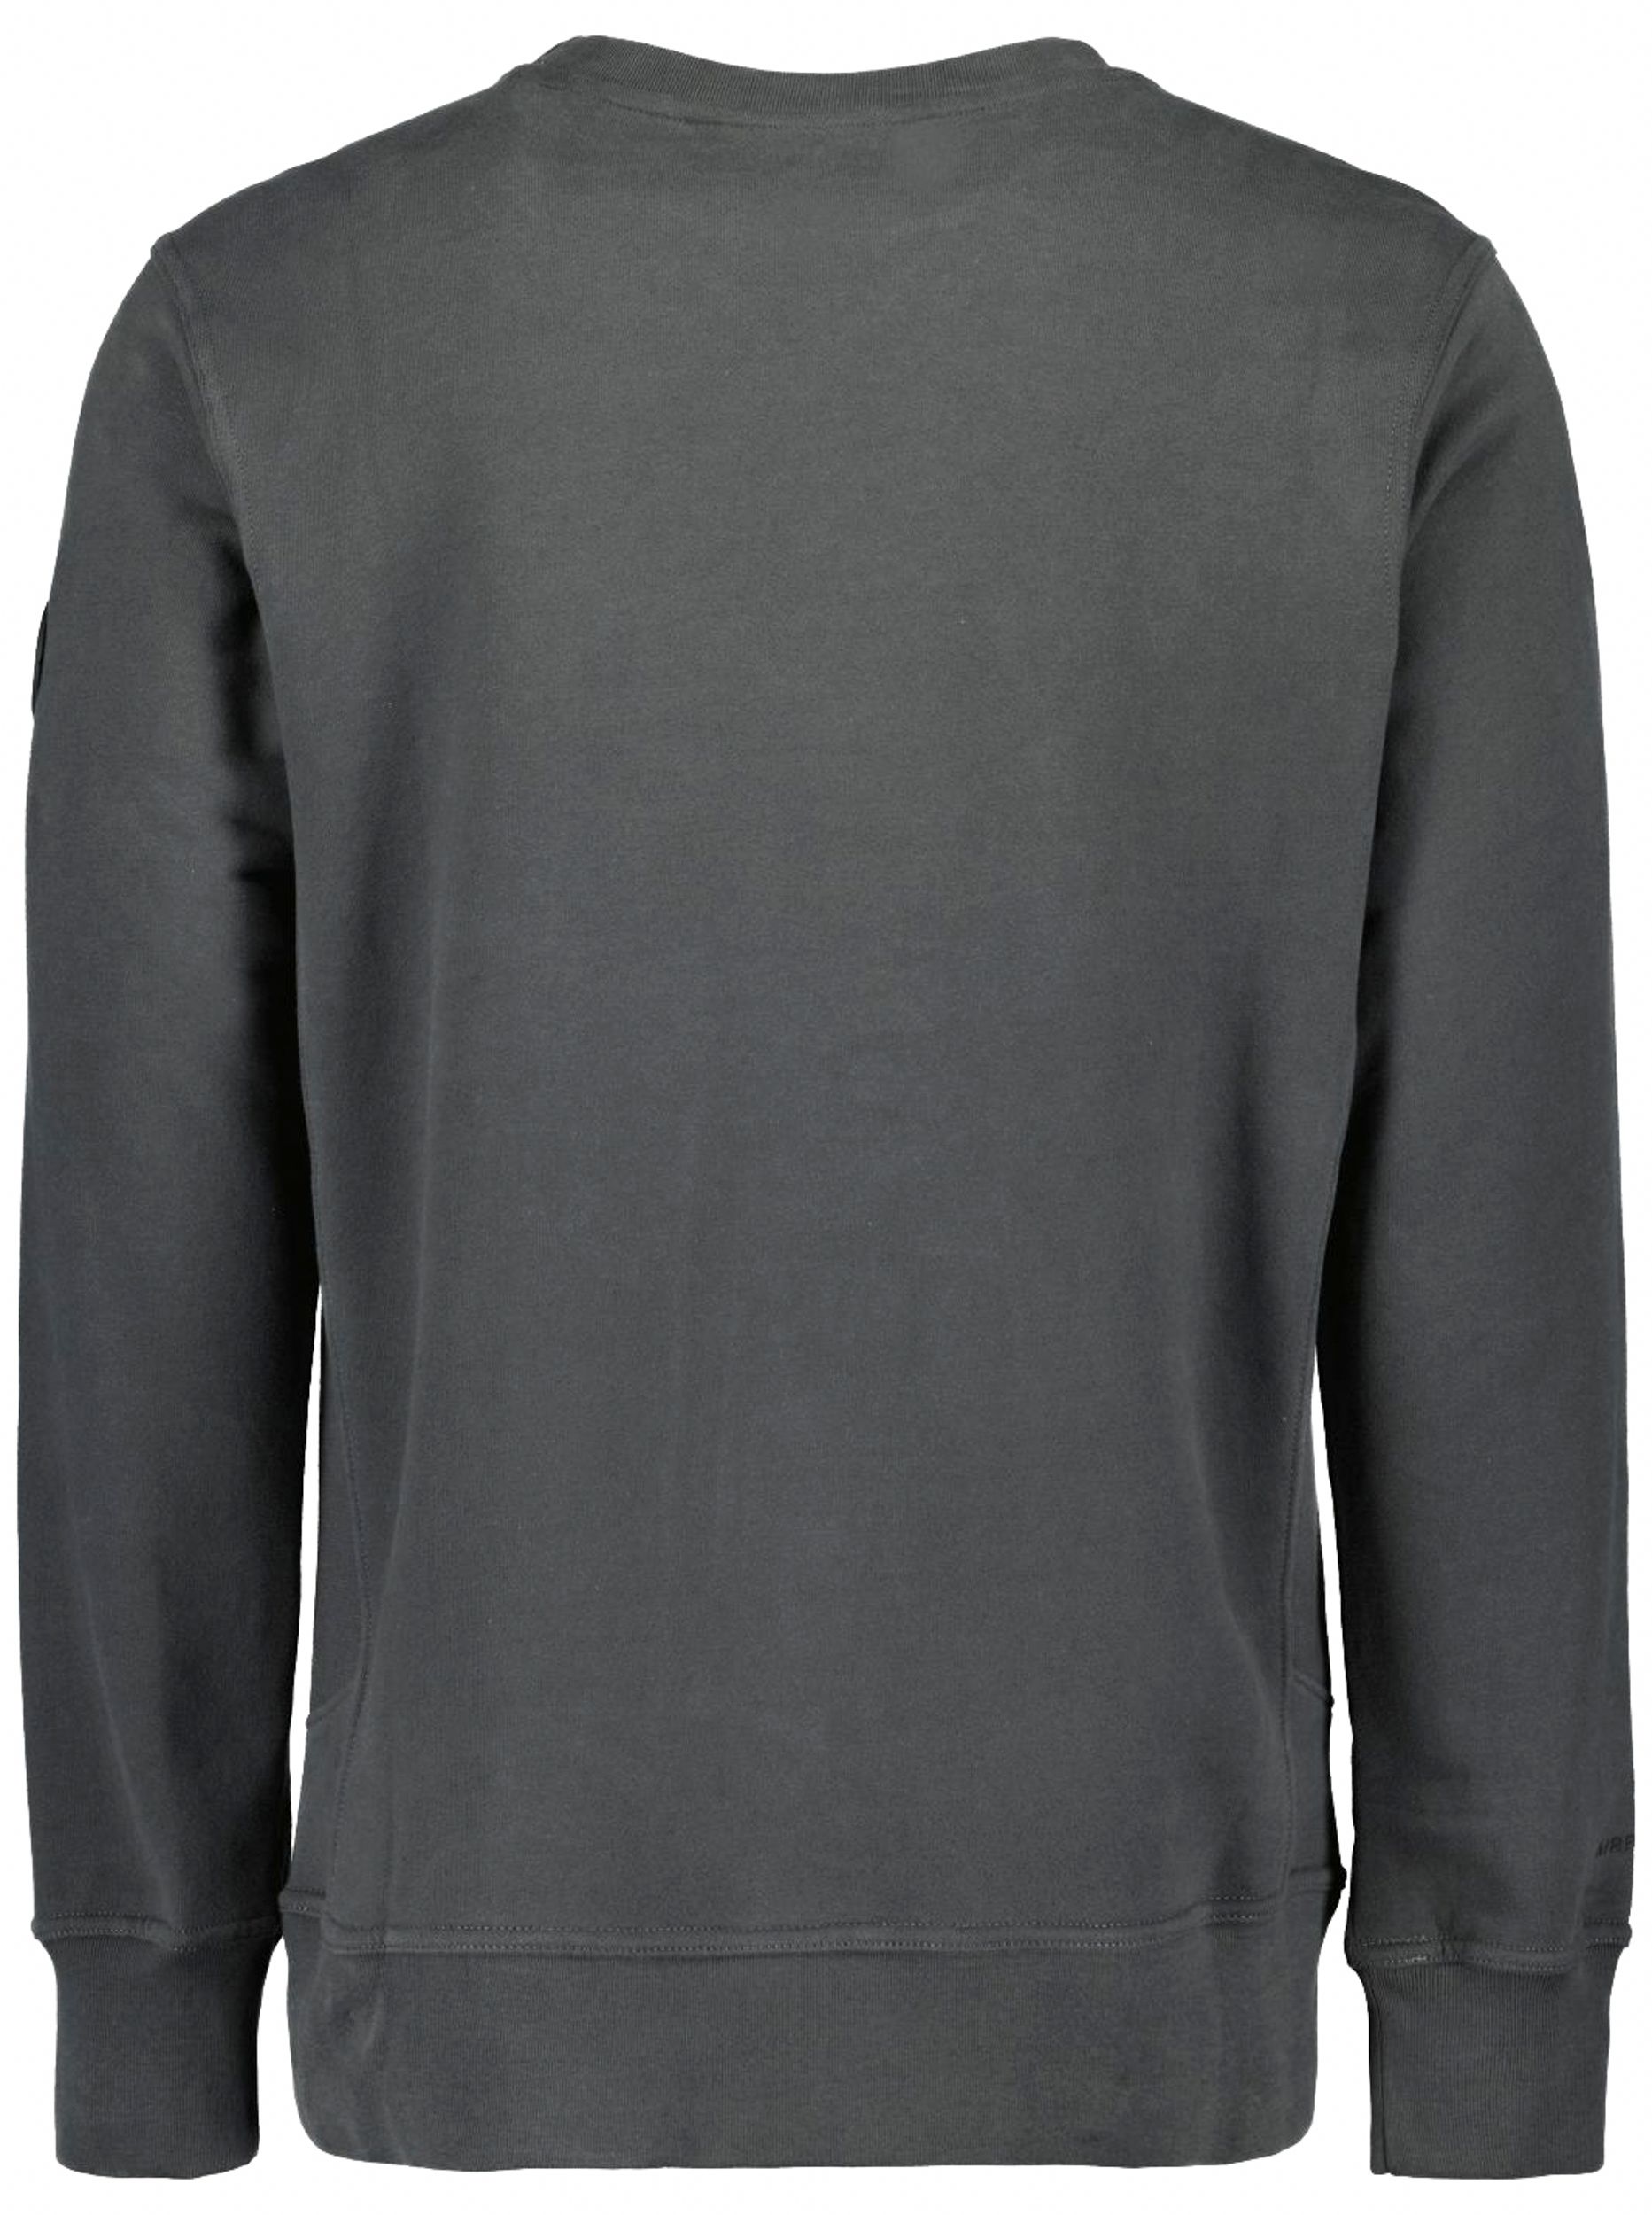 Airforce Sweater Grijs 079399-002-L